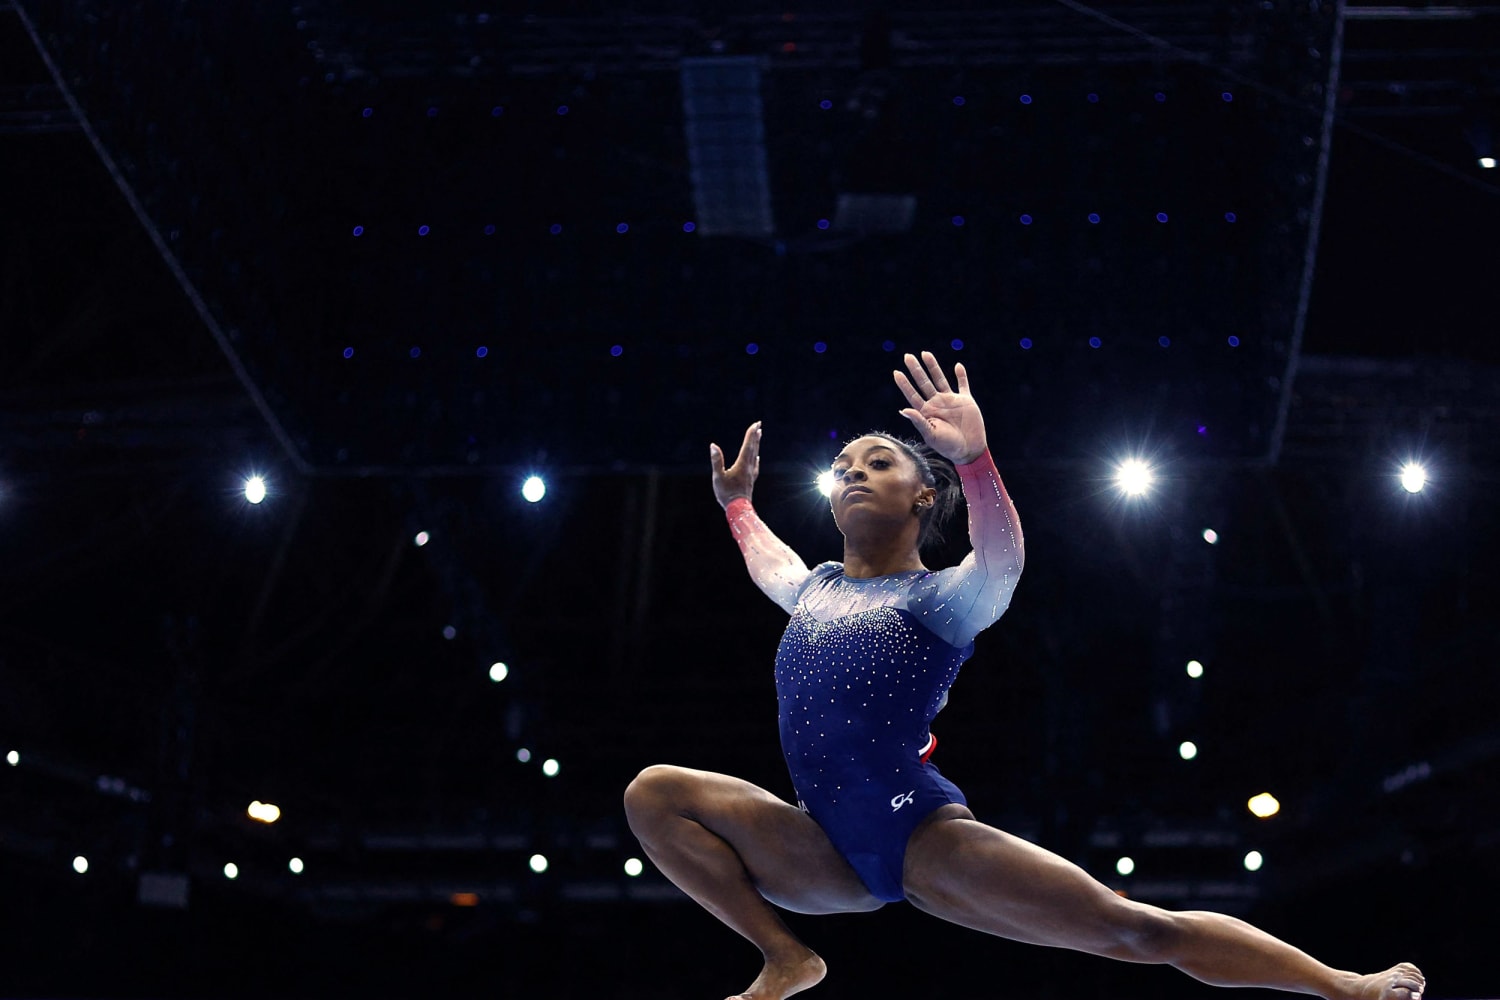 Focus: ON-Artistic gymnastics at the Tokyo Olympics